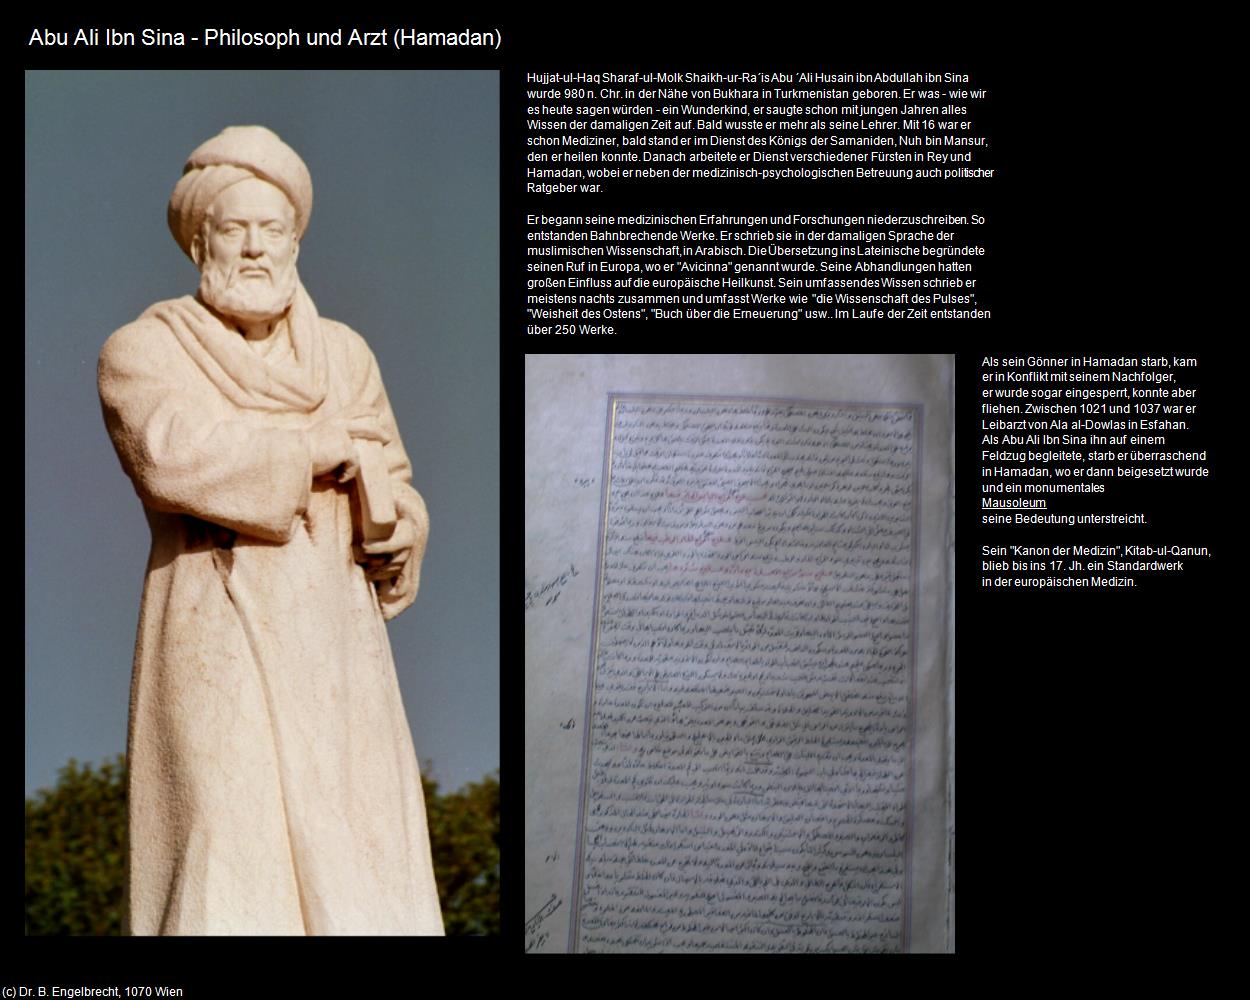 Abu Ali Ibn Sina - Philosoph und Arzt (Hamadan) in Iran(c)B.Engelbrecht